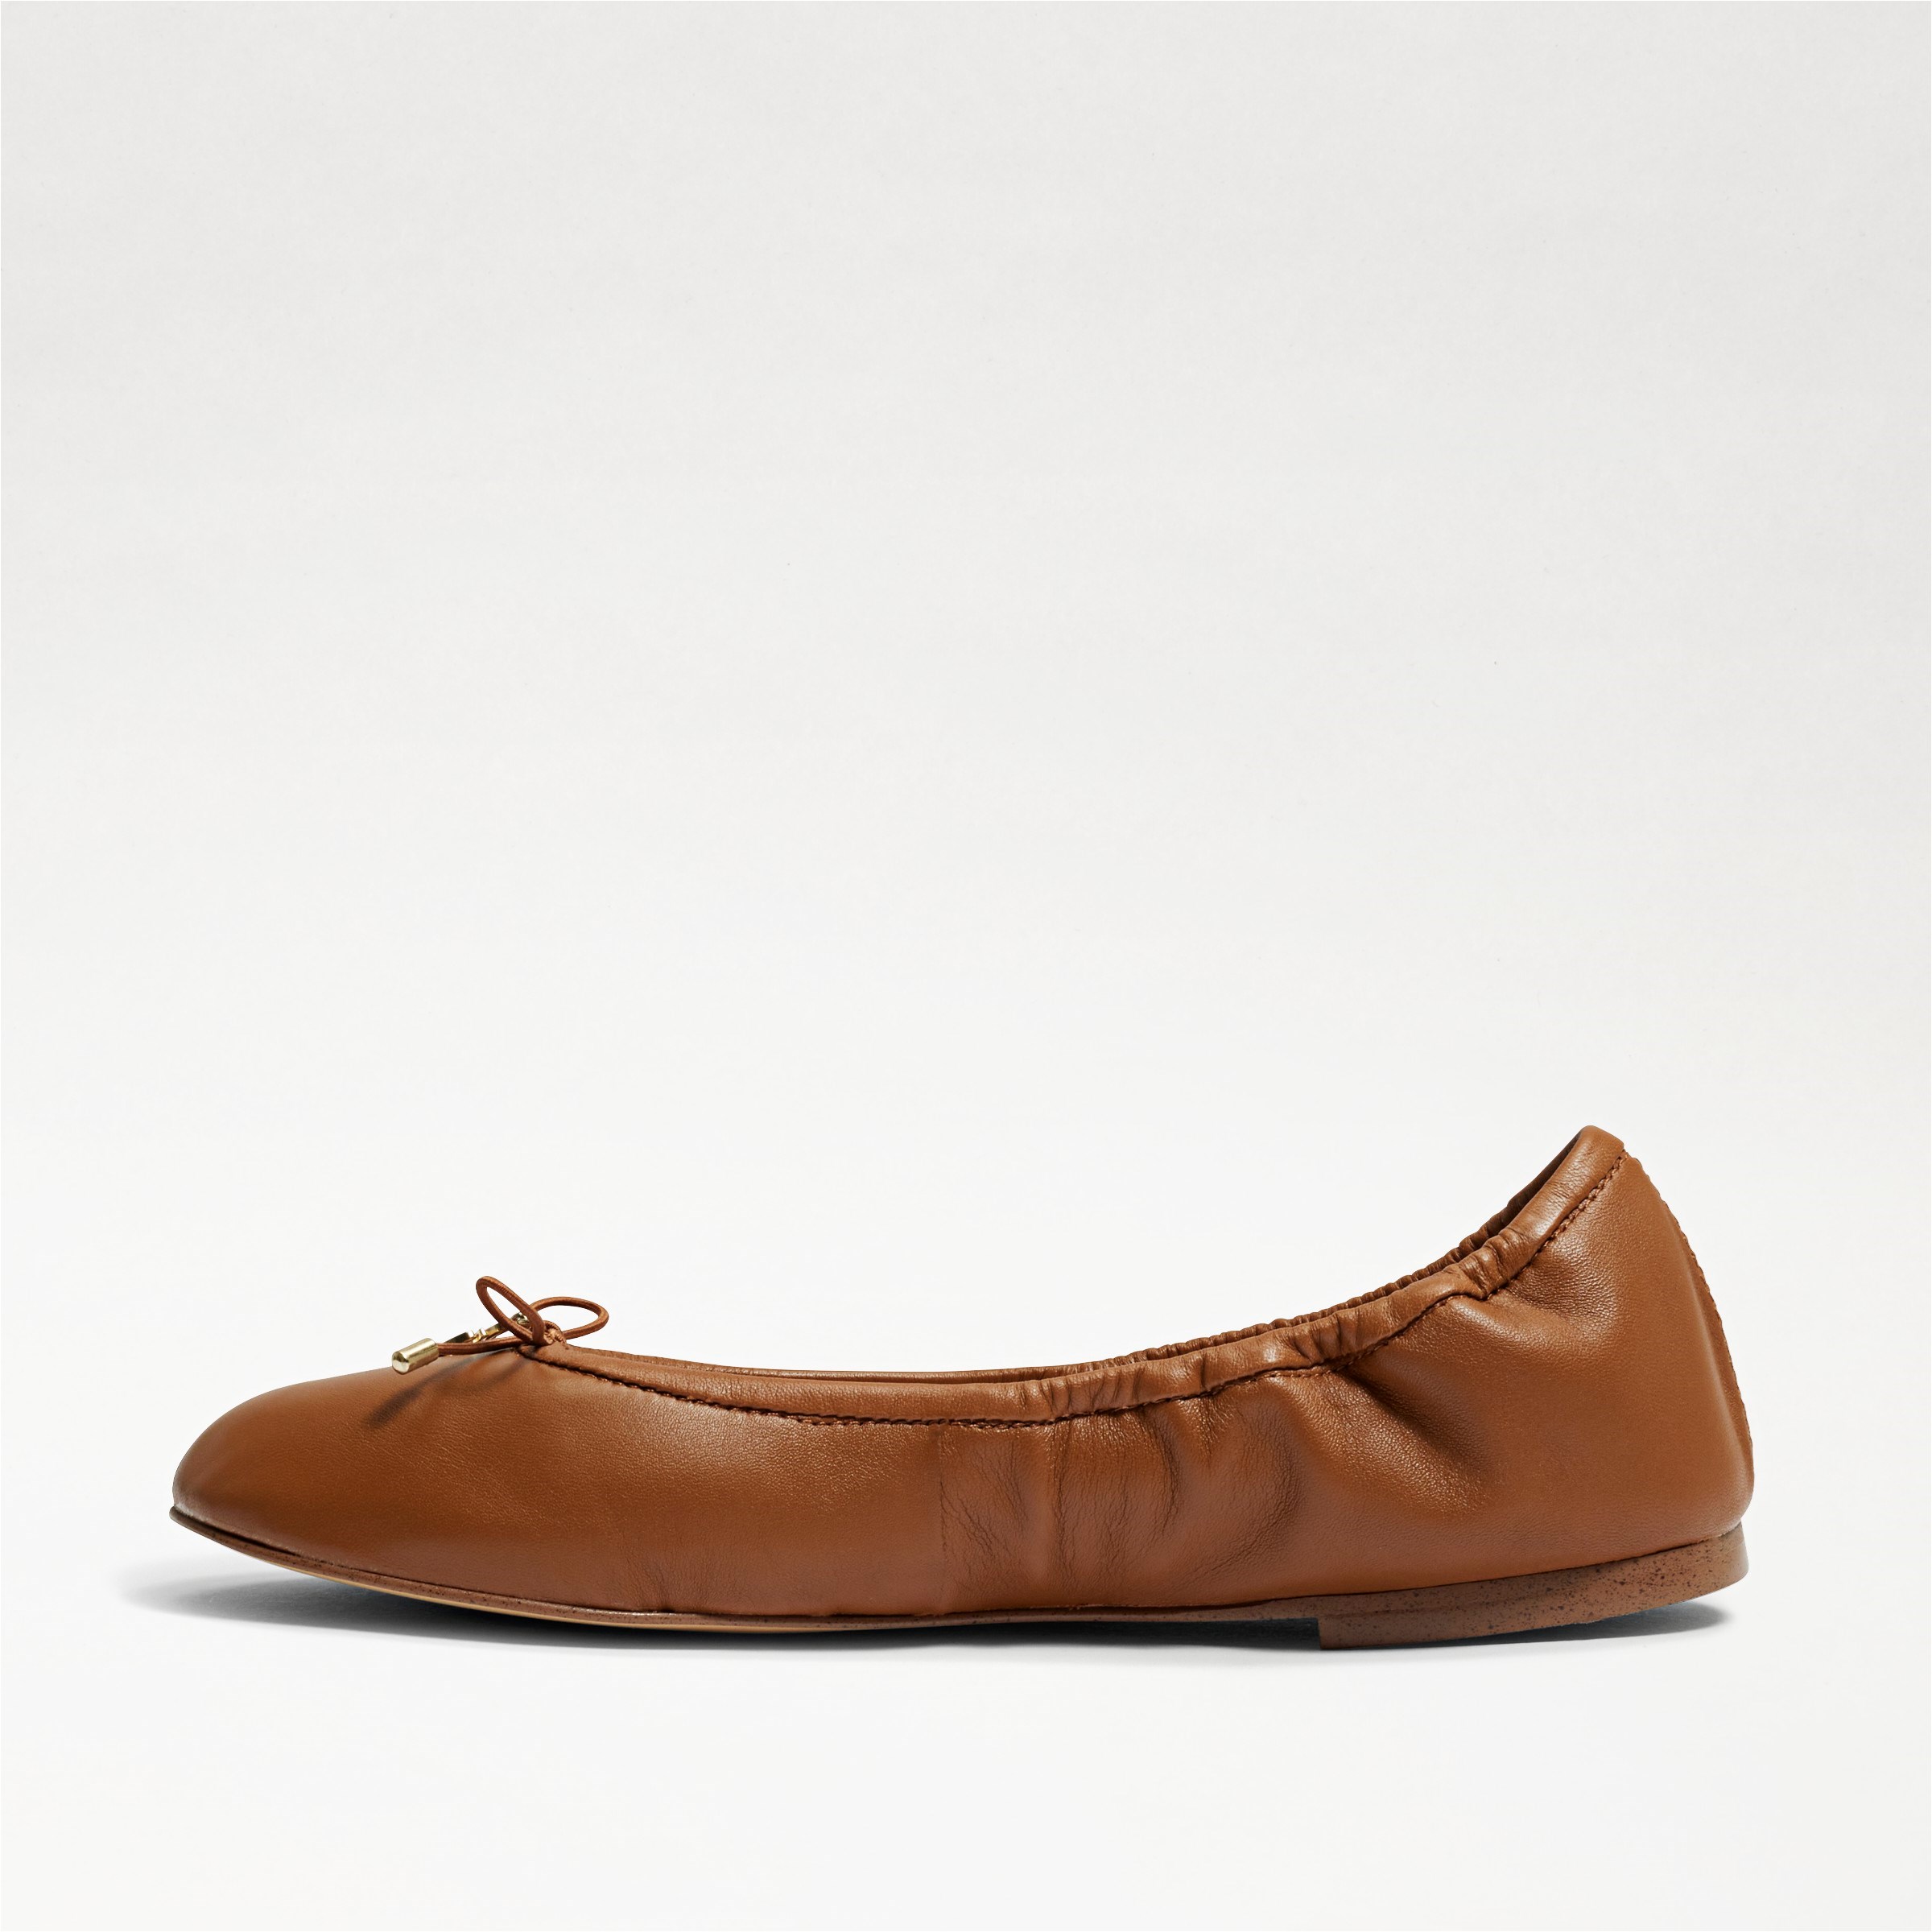 Leather Elastic Brown Beige Flat Ballet Shoes Bow Ribbon Round Toe AU Sz 6-8.5 